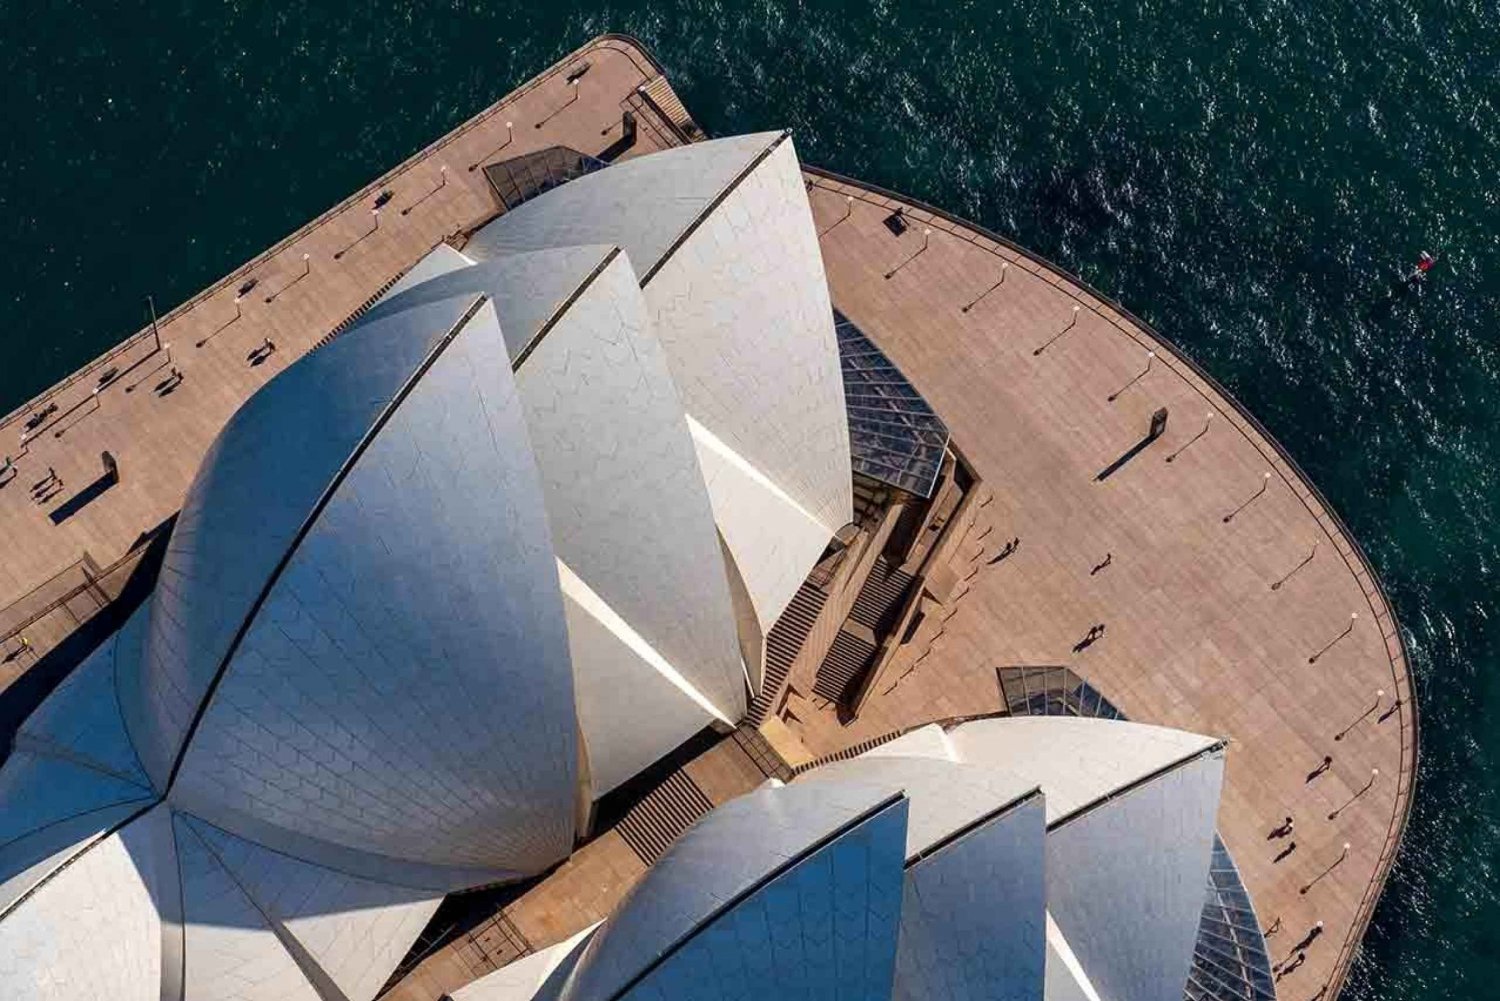 Sydney: Private City Exploration with Bondi Beach Tour